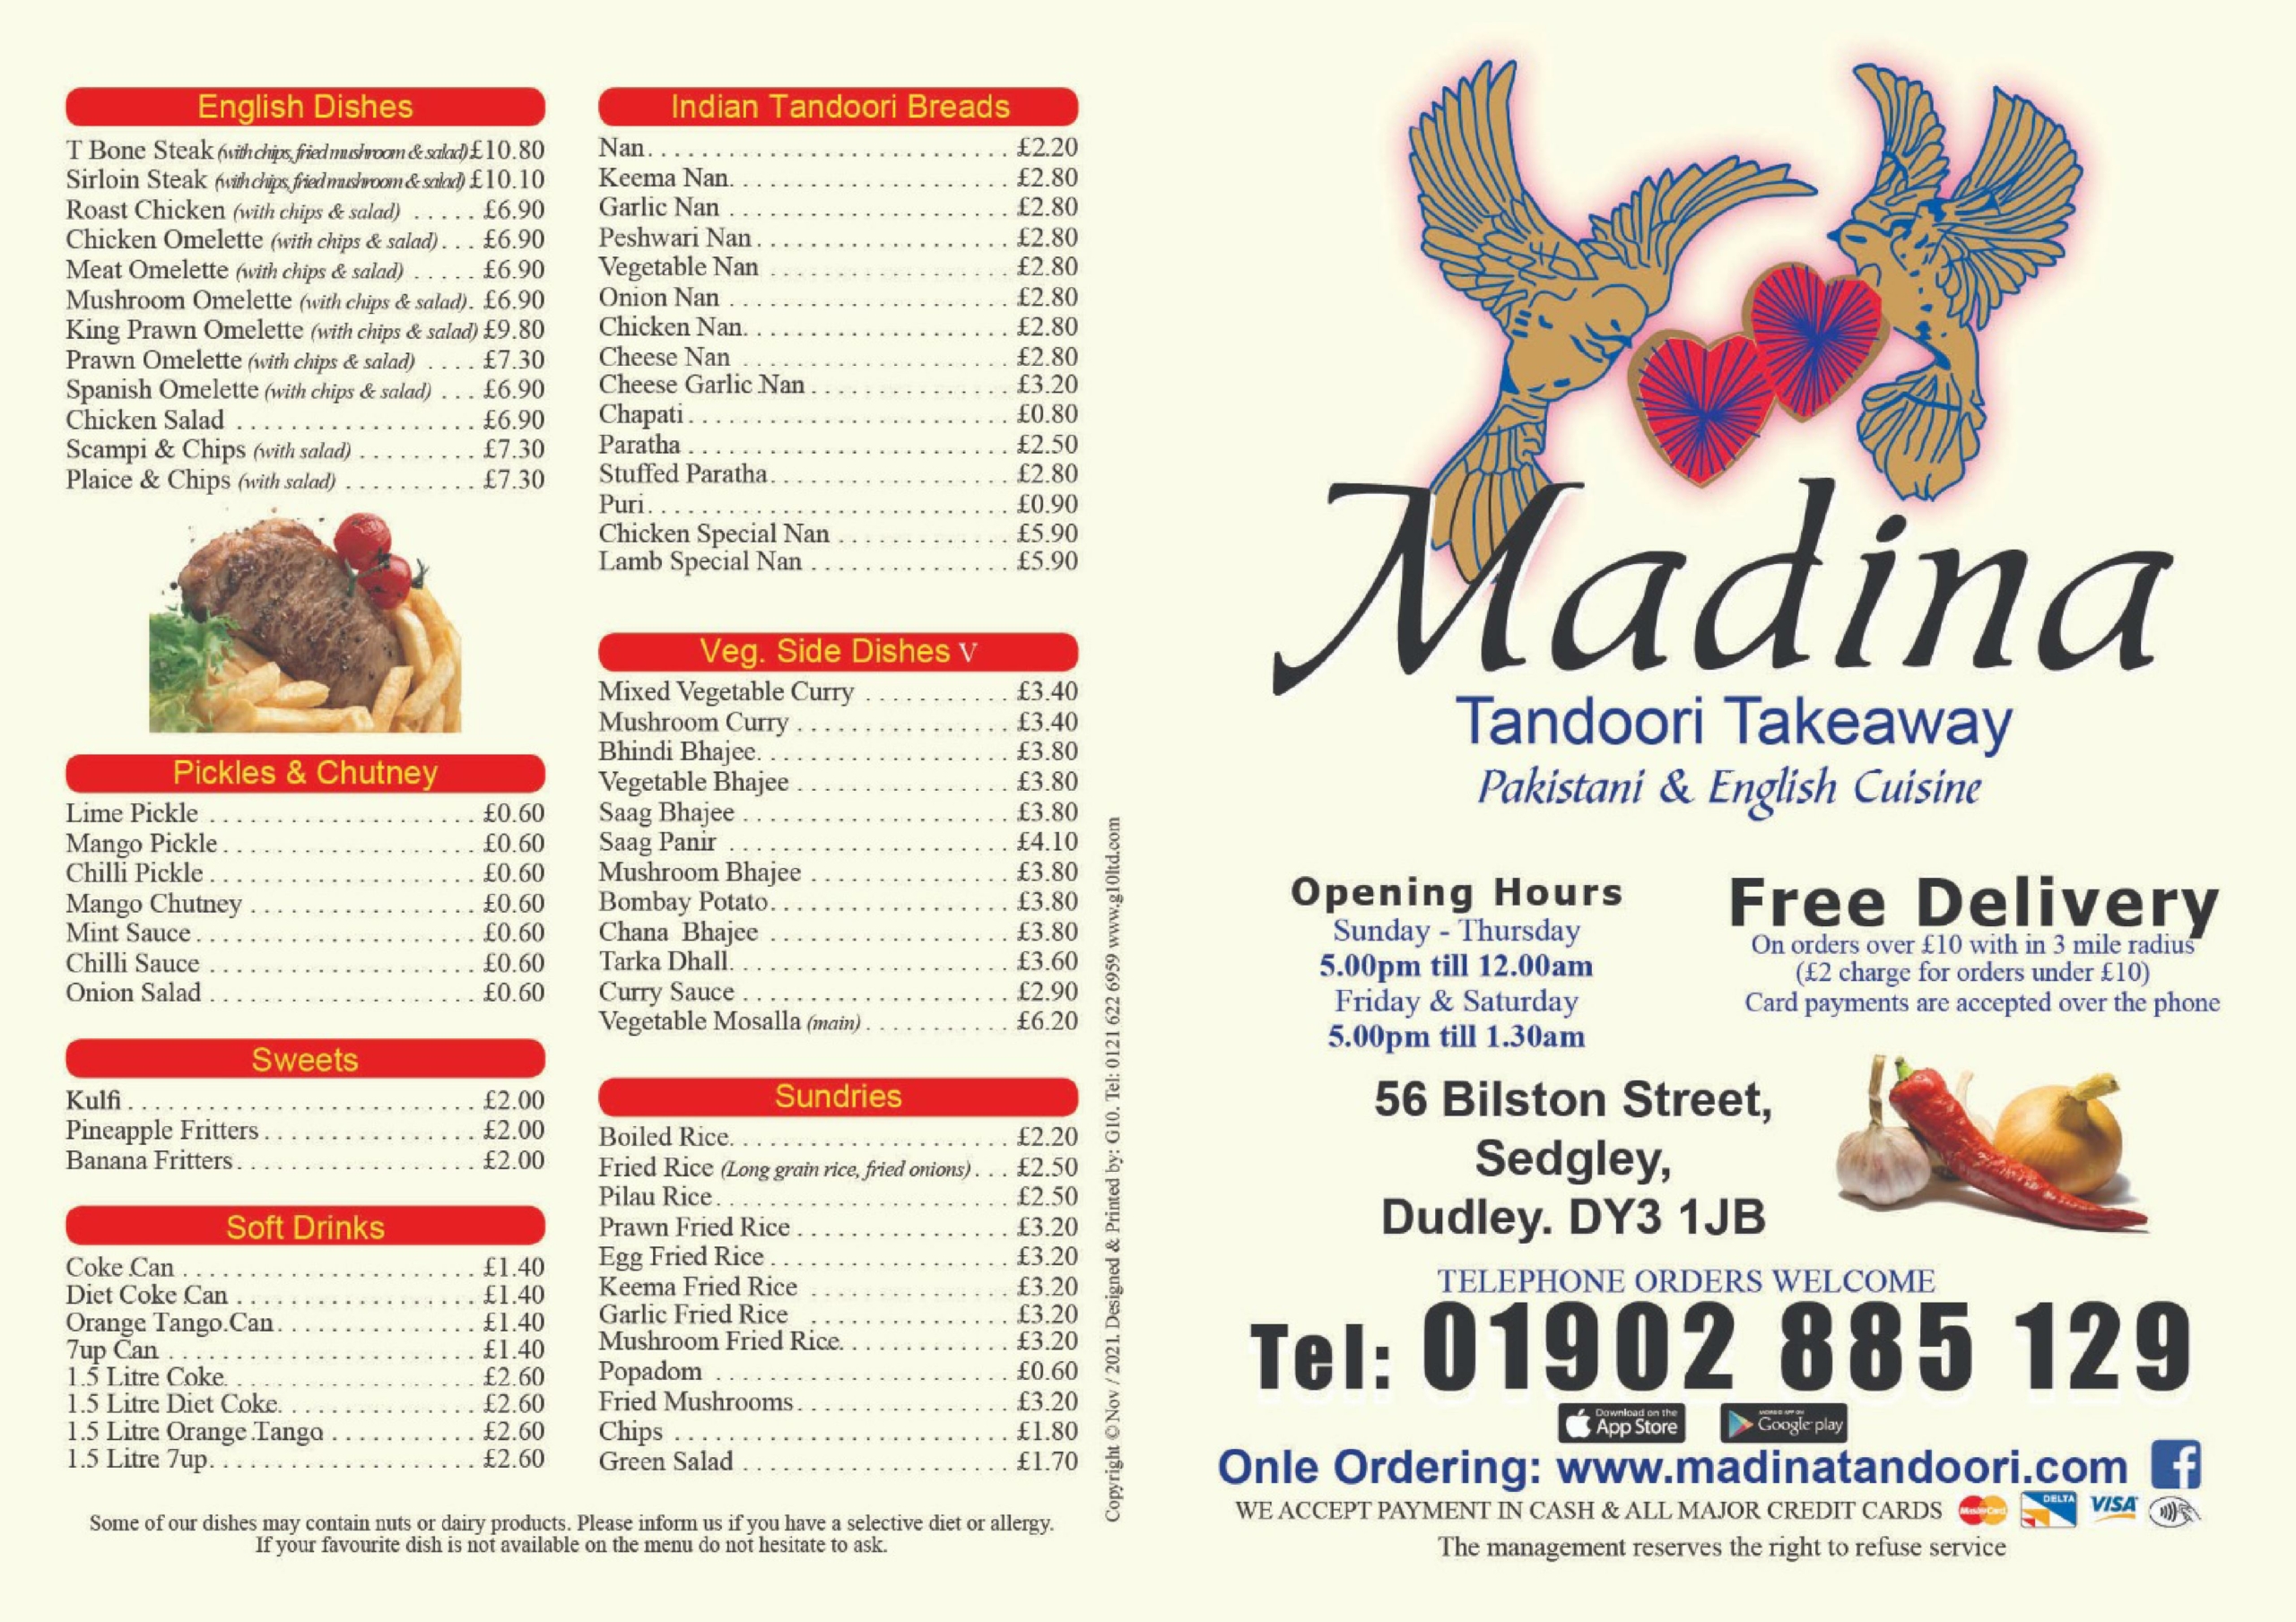 Madina Pakistani and English takeaway in Sedgley Dudley - main menu